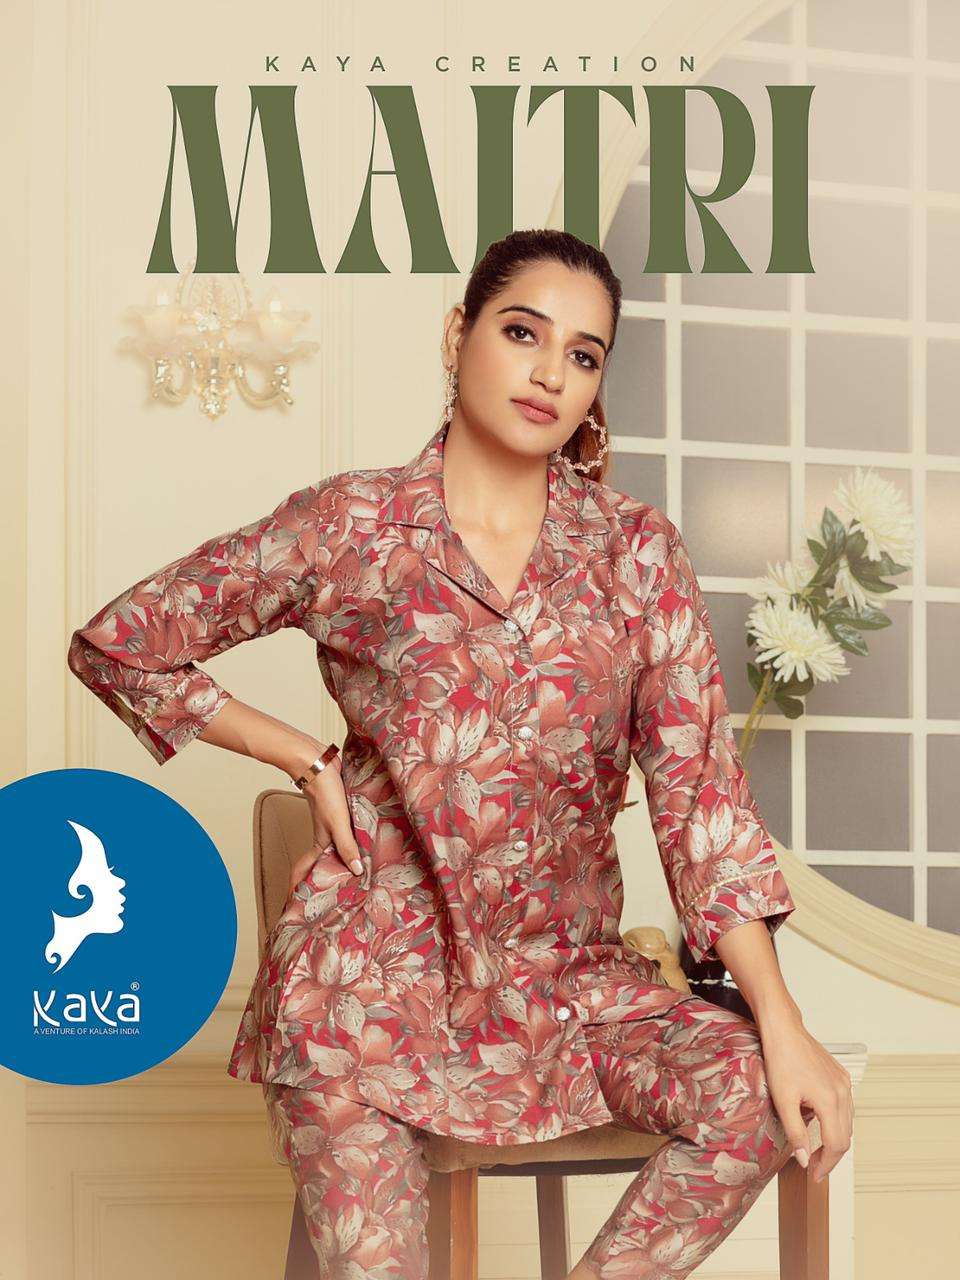 kaya maitri chanderi modal designer cord set catalogue online shop surat